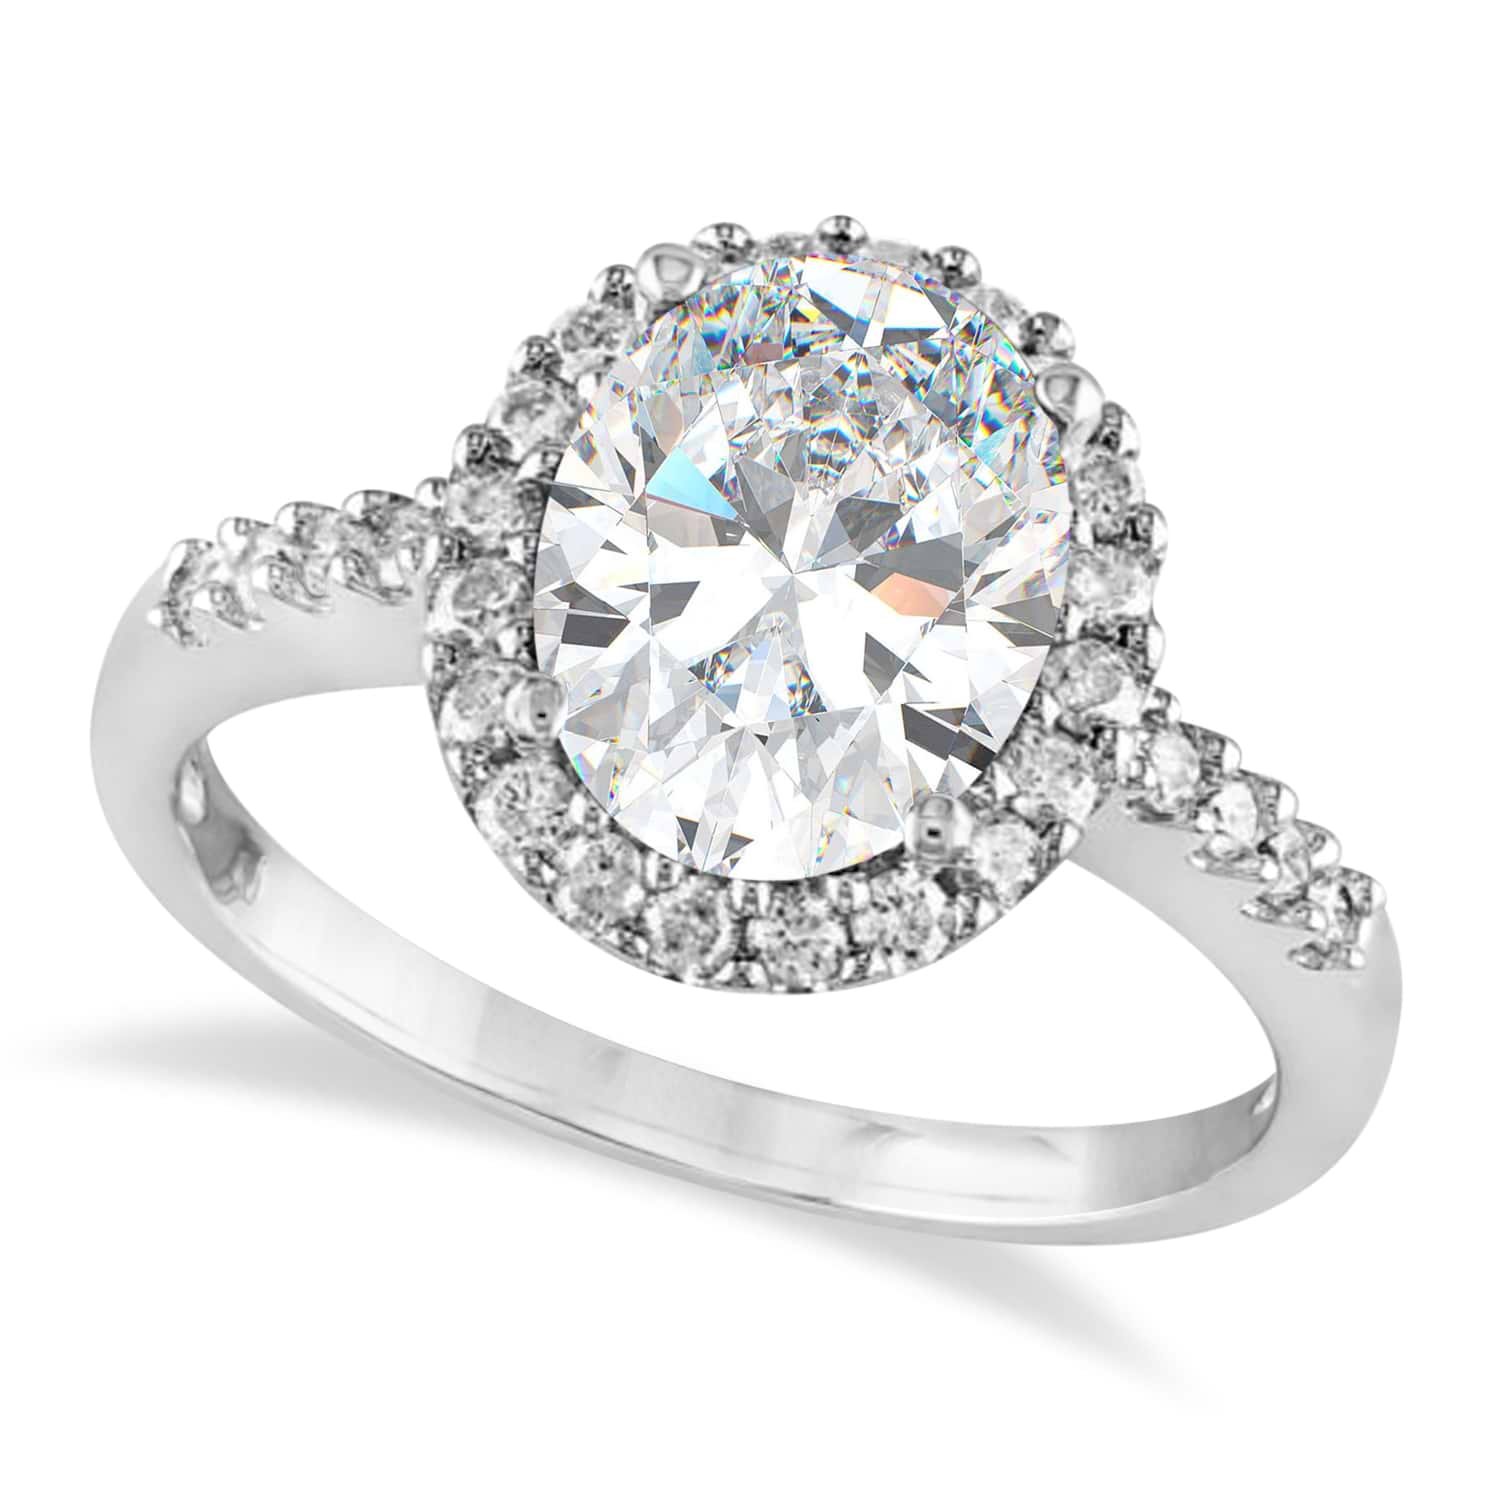 Oval Moissanite & Halo Diamond Engagement Ring 14k White Gold 2.82ct